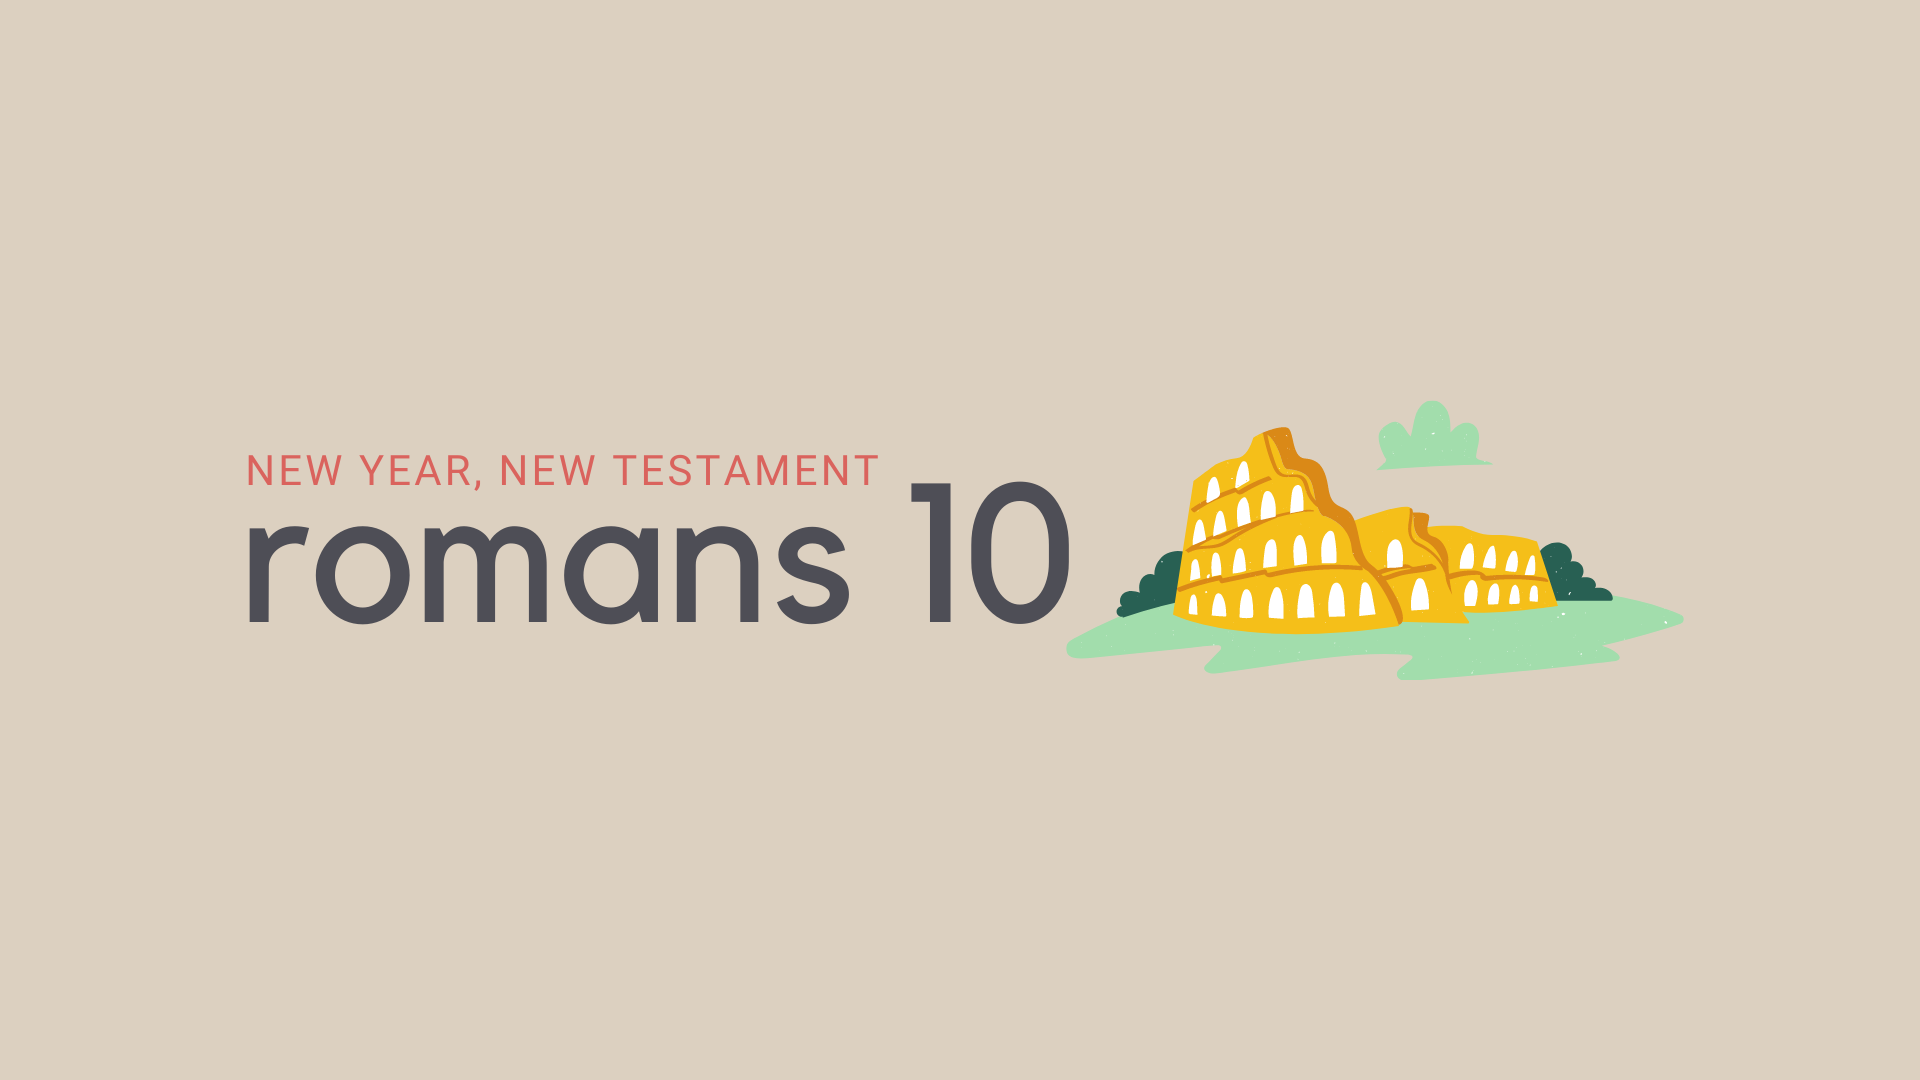 June 30: Romans 10